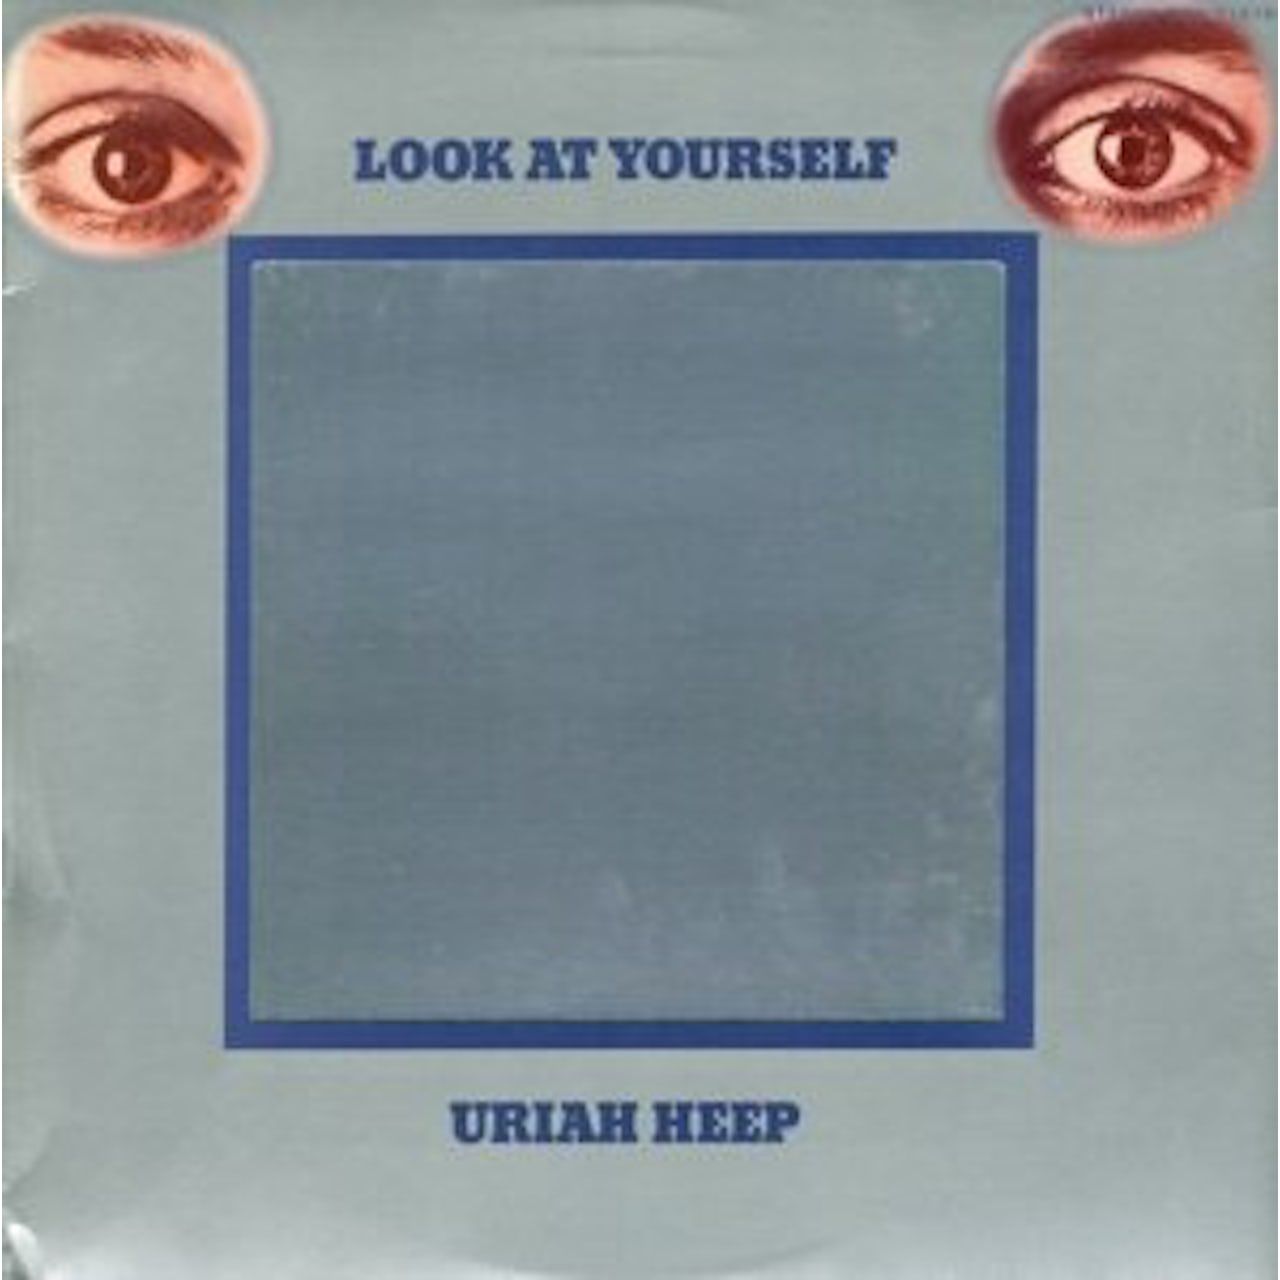 bmg uriah heep look at yourself виниловая пластинка 5414939928376, Виниловая пластинка Uriah Heep, Look At Yourself